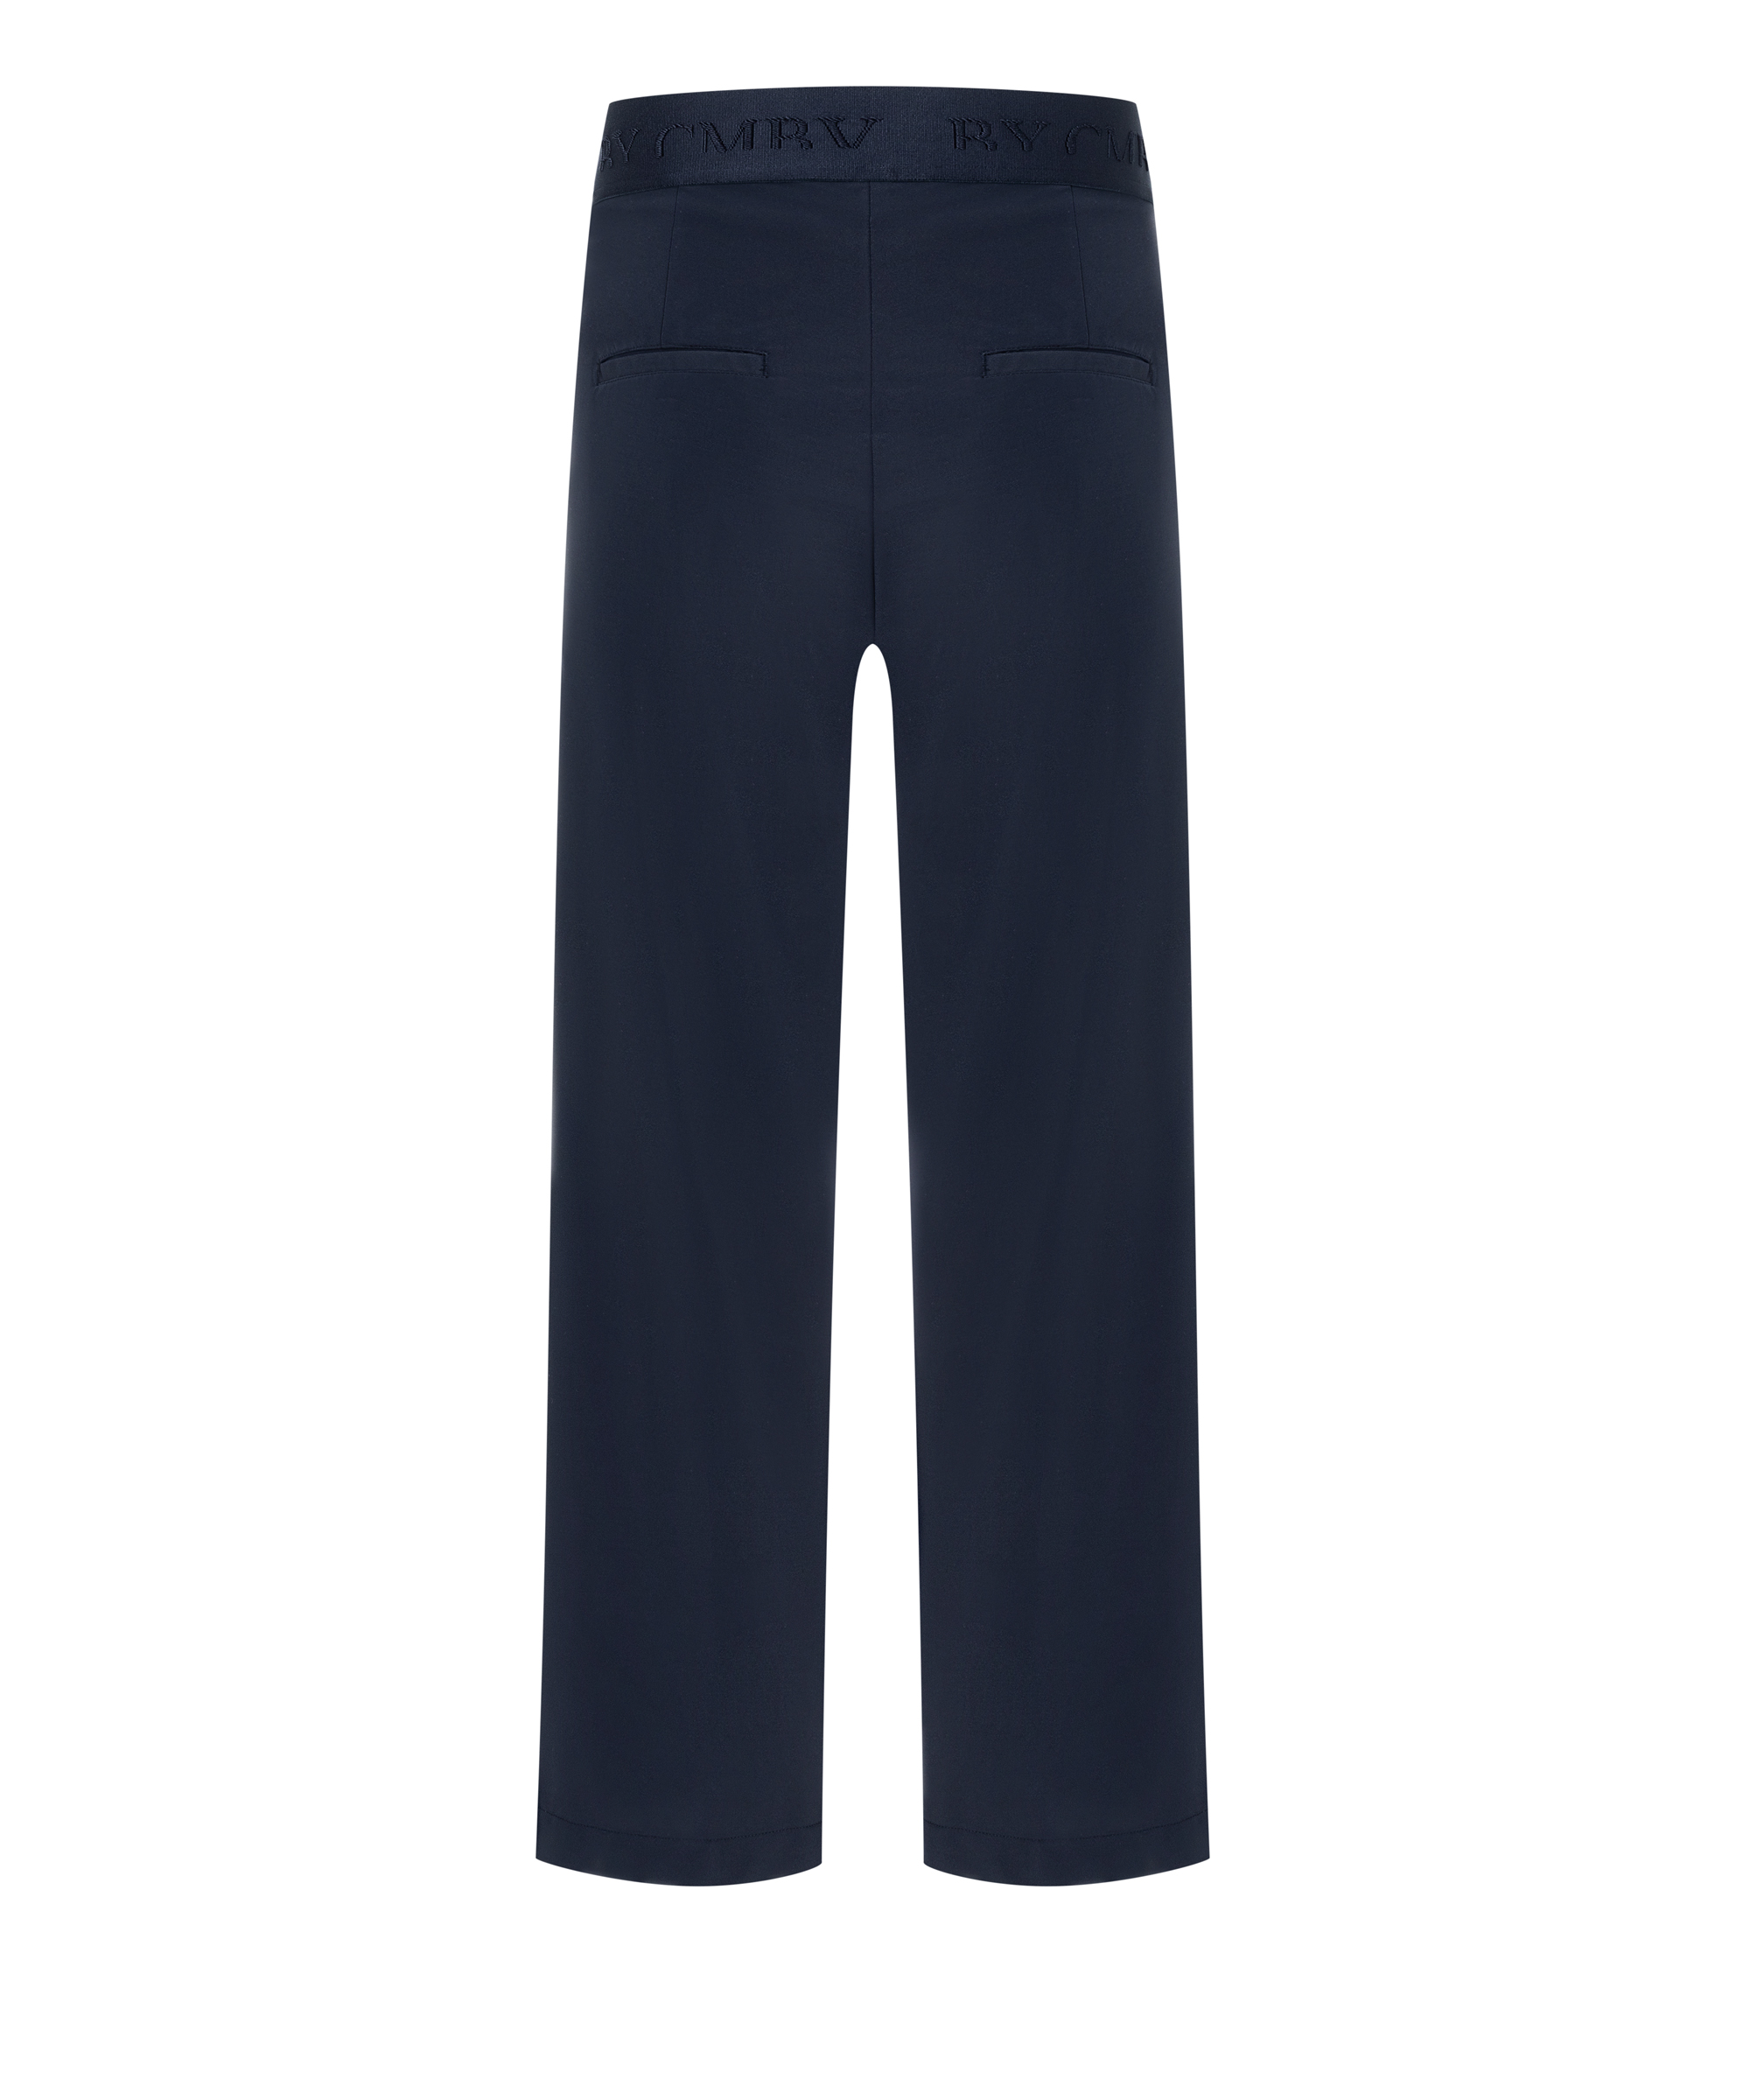 Cambio trousers Cameron navy/dunkelblau